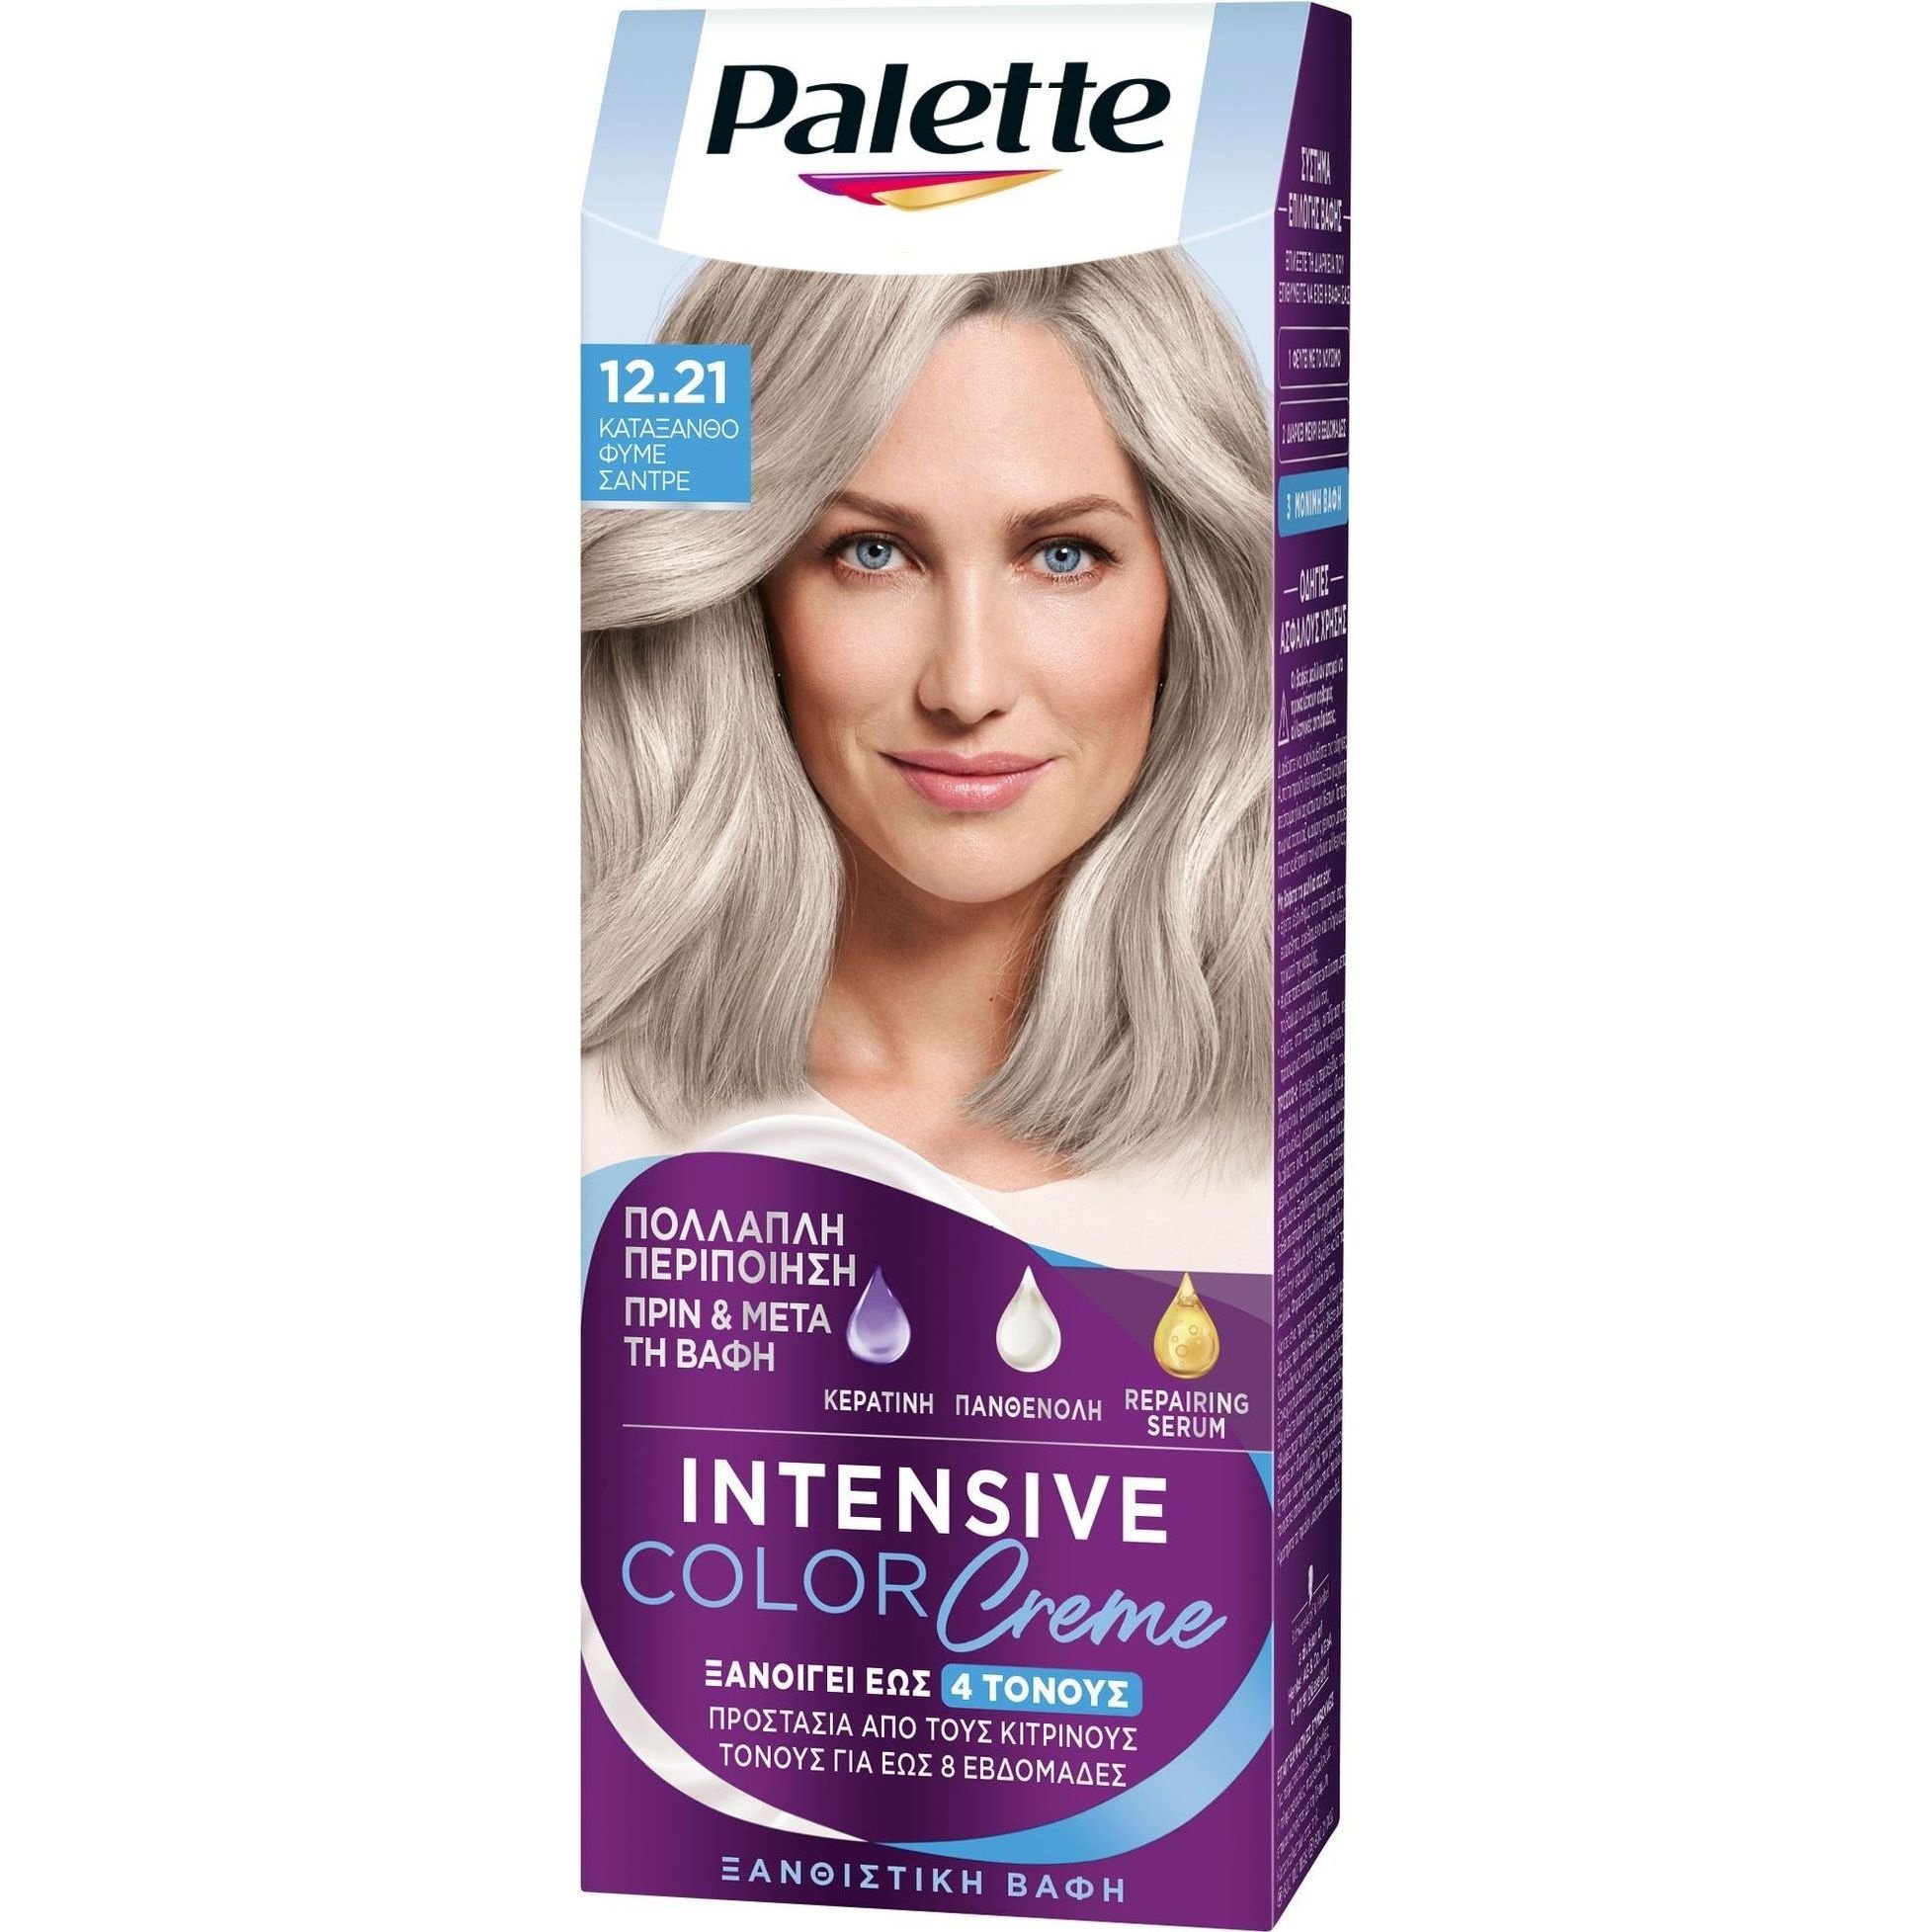 Schwarzkopf Palette Intensive Hair Color Creme Kit Μόνιμη Κρέμα Βαφή Μαλλιών για Έντονο Χρώμα Μεγάλης Διάρκειας & Περιποίηση 1 Τεμάχιο – 12.21 Κατάξανθο Φυμέ Σαντρέ